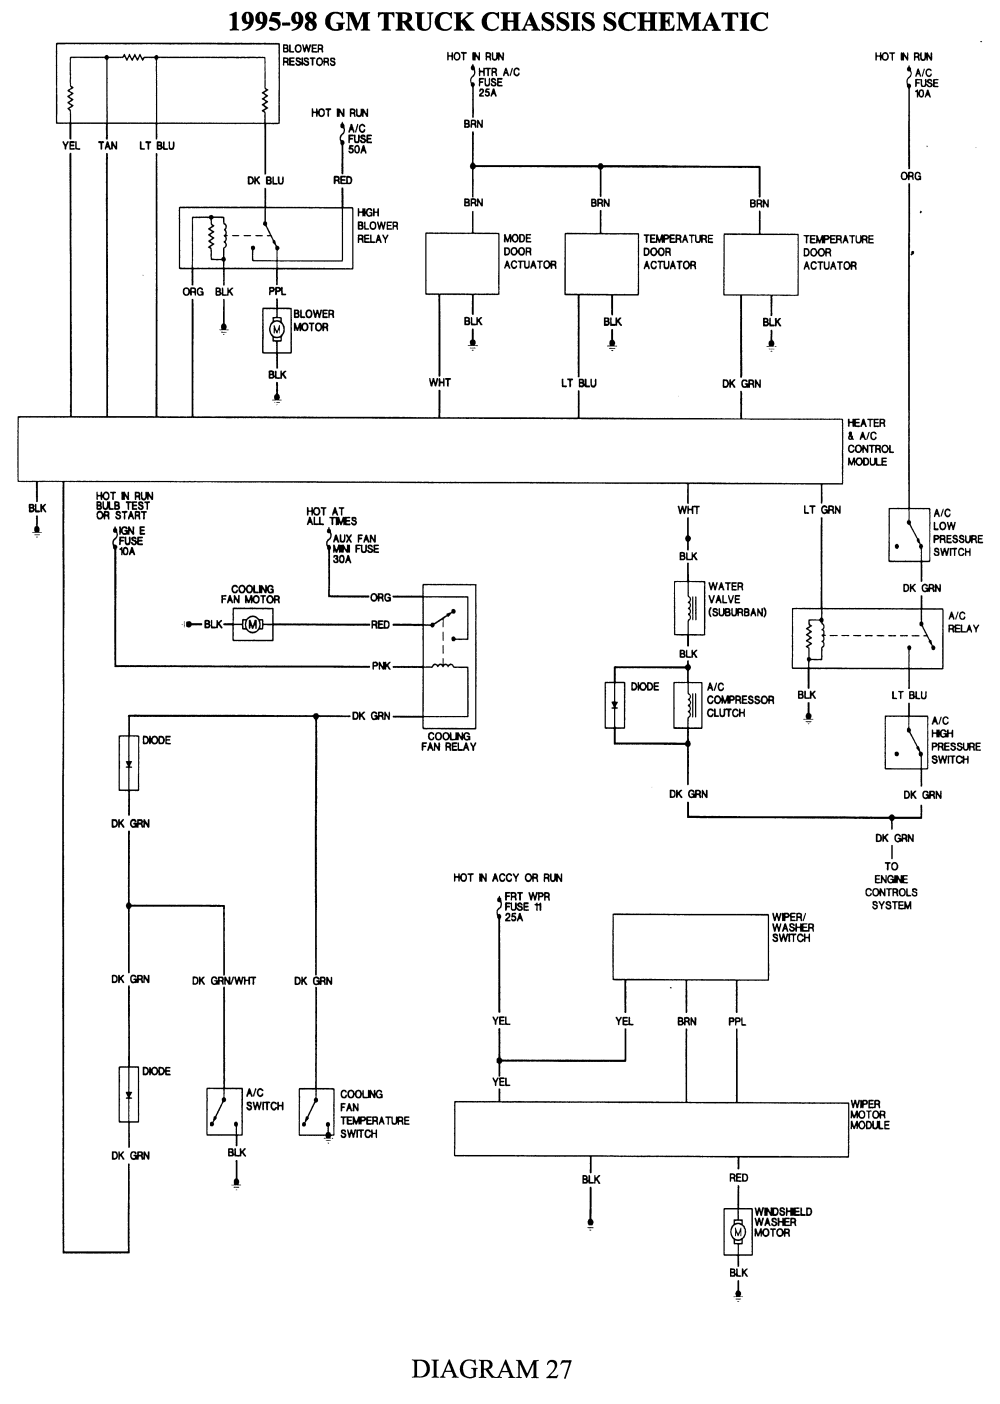 Wiring Diagrams and Free Manual Ebooks: 1995-98 General ... 98 c3500 wiring diagram 